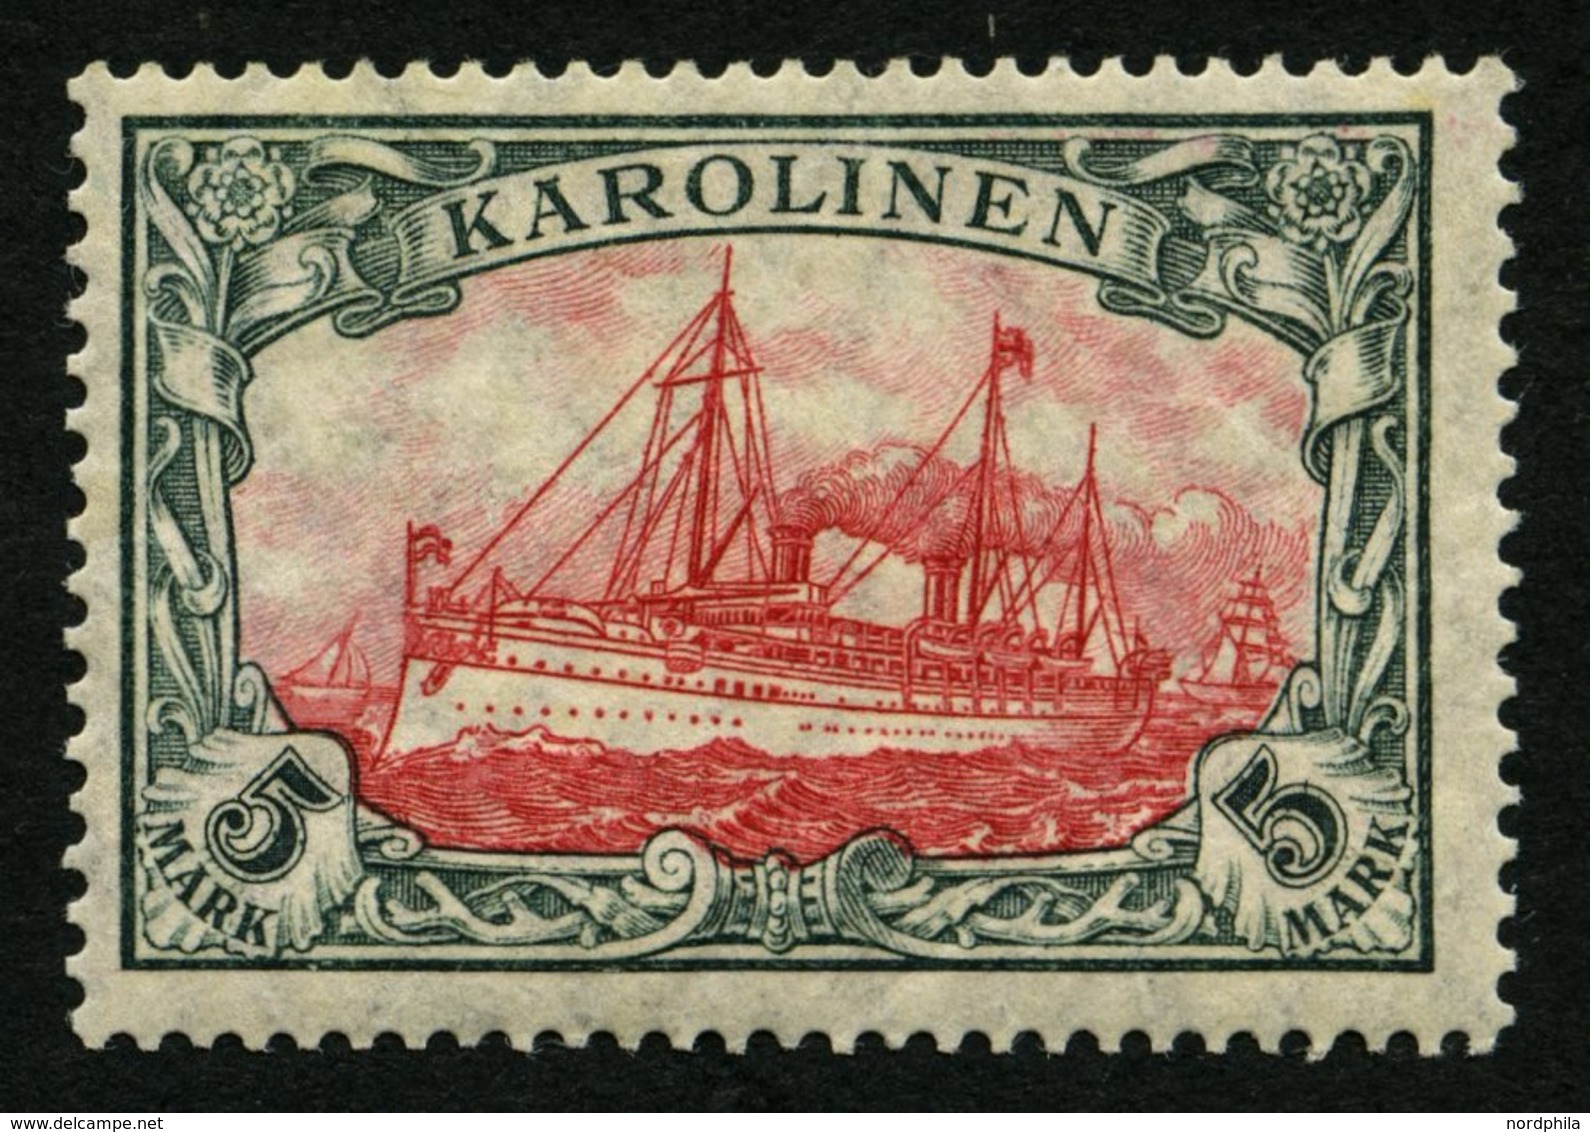 KAROLINEN 22IA *, 1915, 5 M. Grünschwarz/dunkelkarmin, Mit Wz., Friedensdruck, Falzreste, Pracht, Mi. 240.- - Caroline Islands